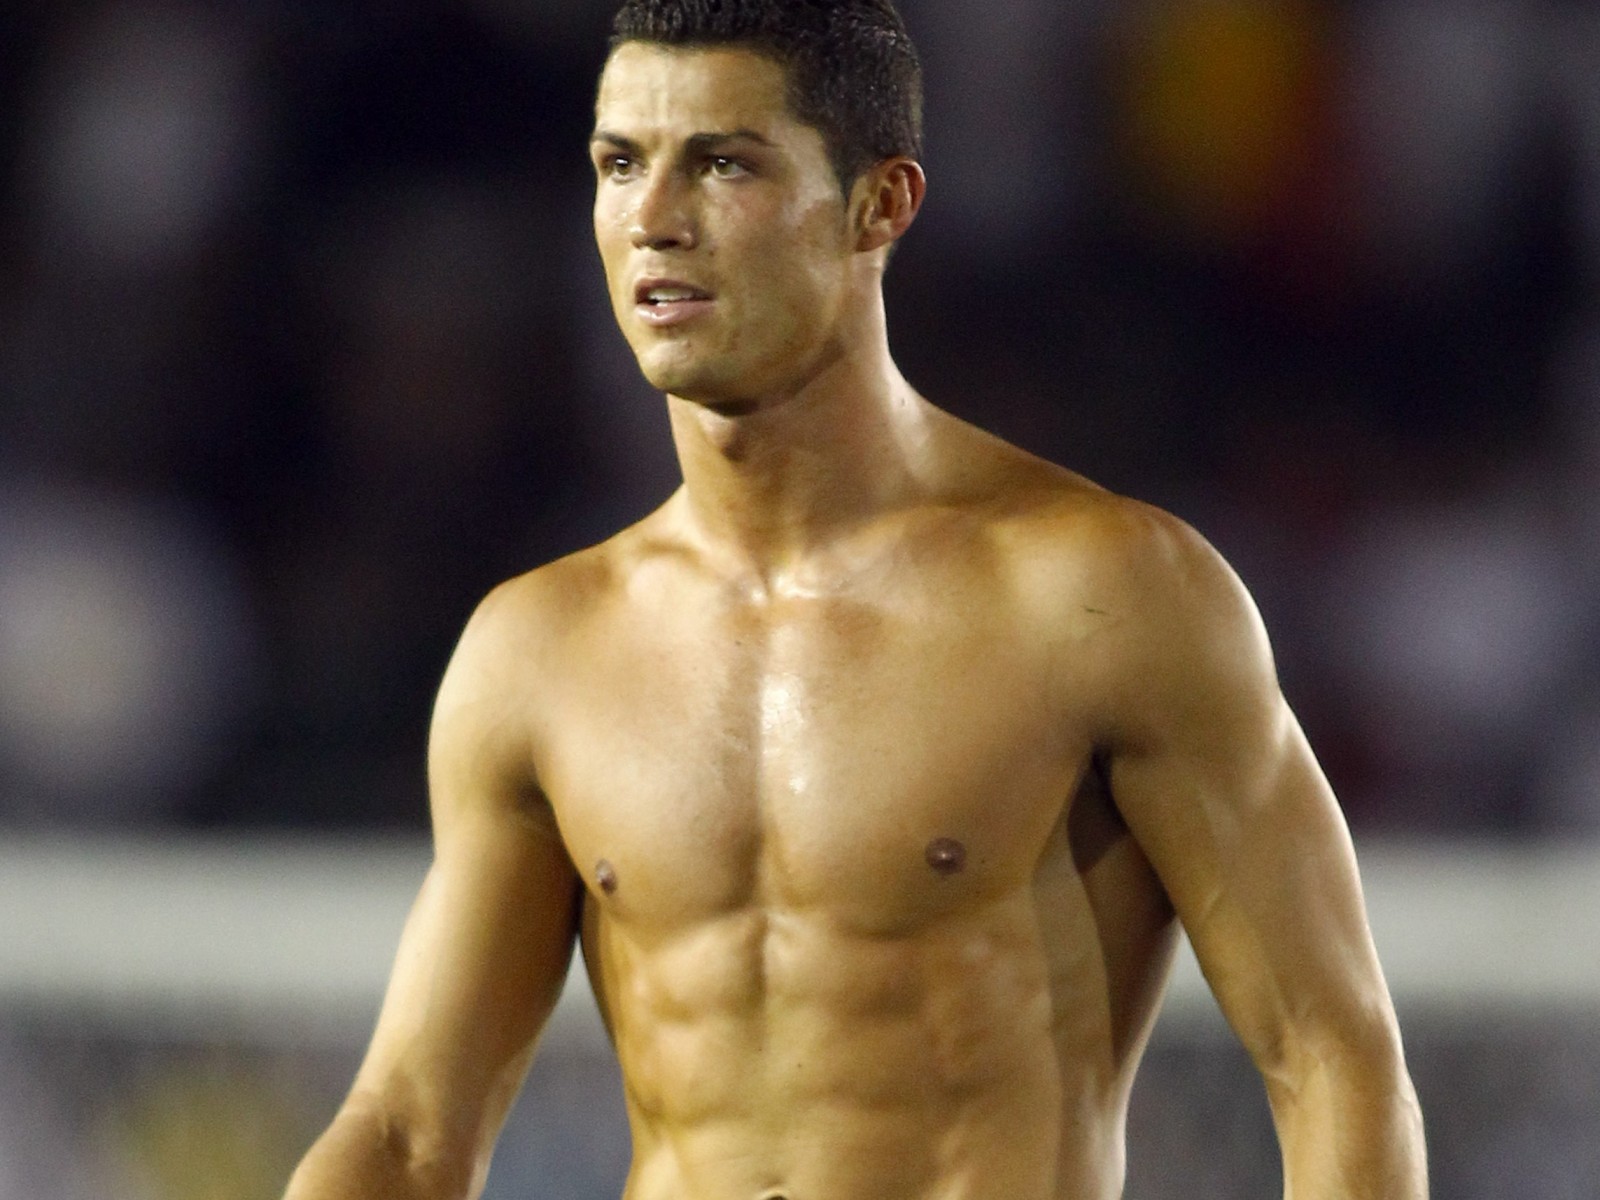 Cristiano Ronaldo shirtless body wallpaper - Cristiano Ronaldo Wallpapers